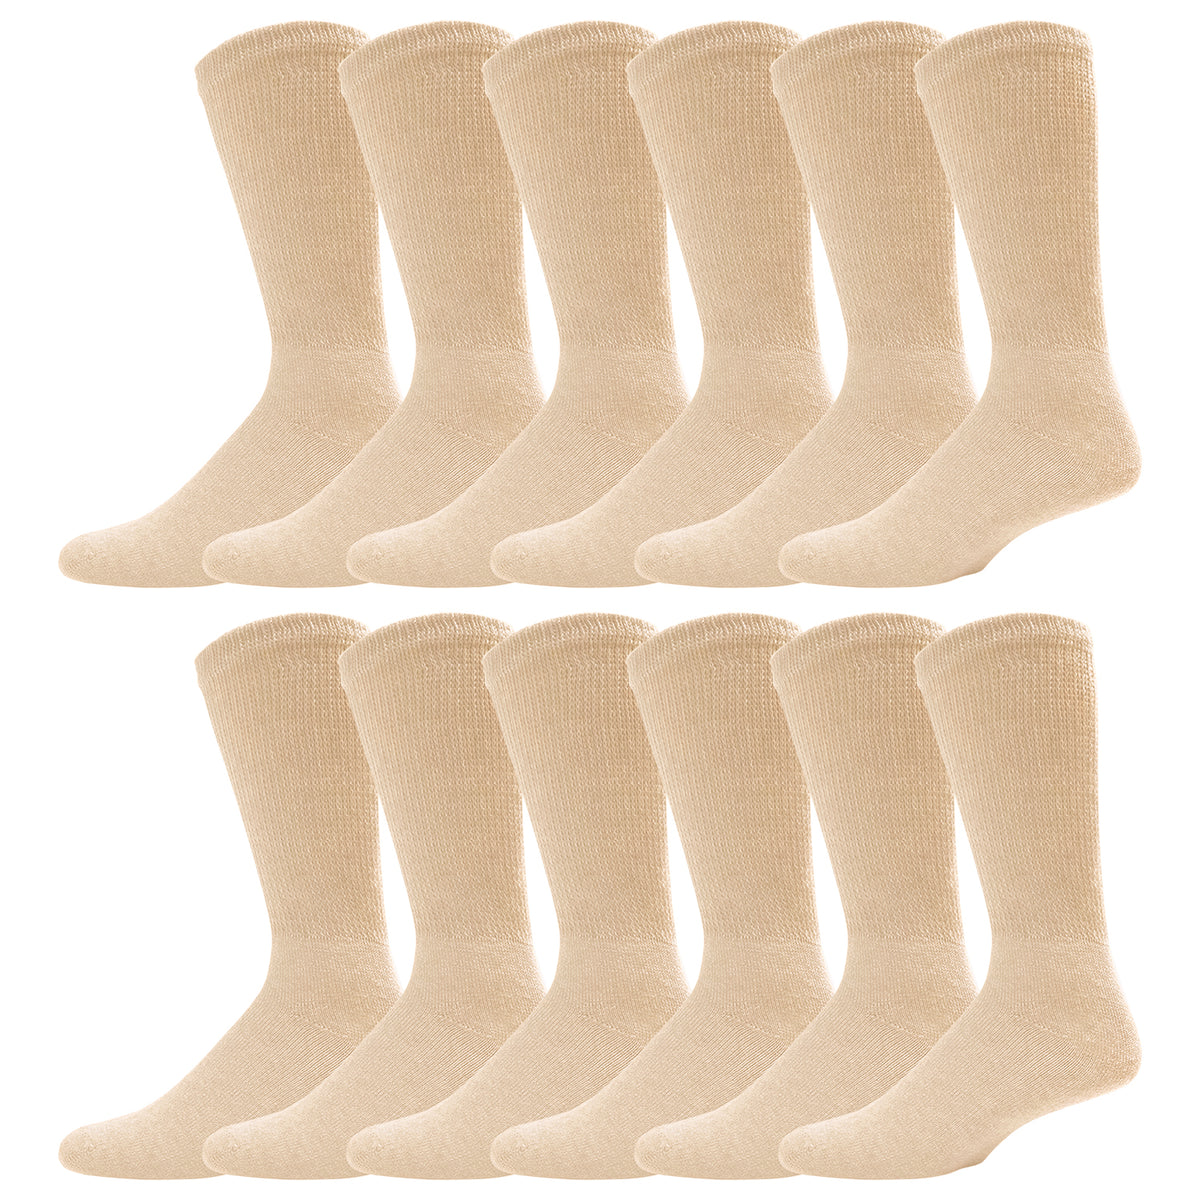 12 Pairs of Diabetic Neuropathy Cotton Crew Socks, Cream, Size 10-13 ...